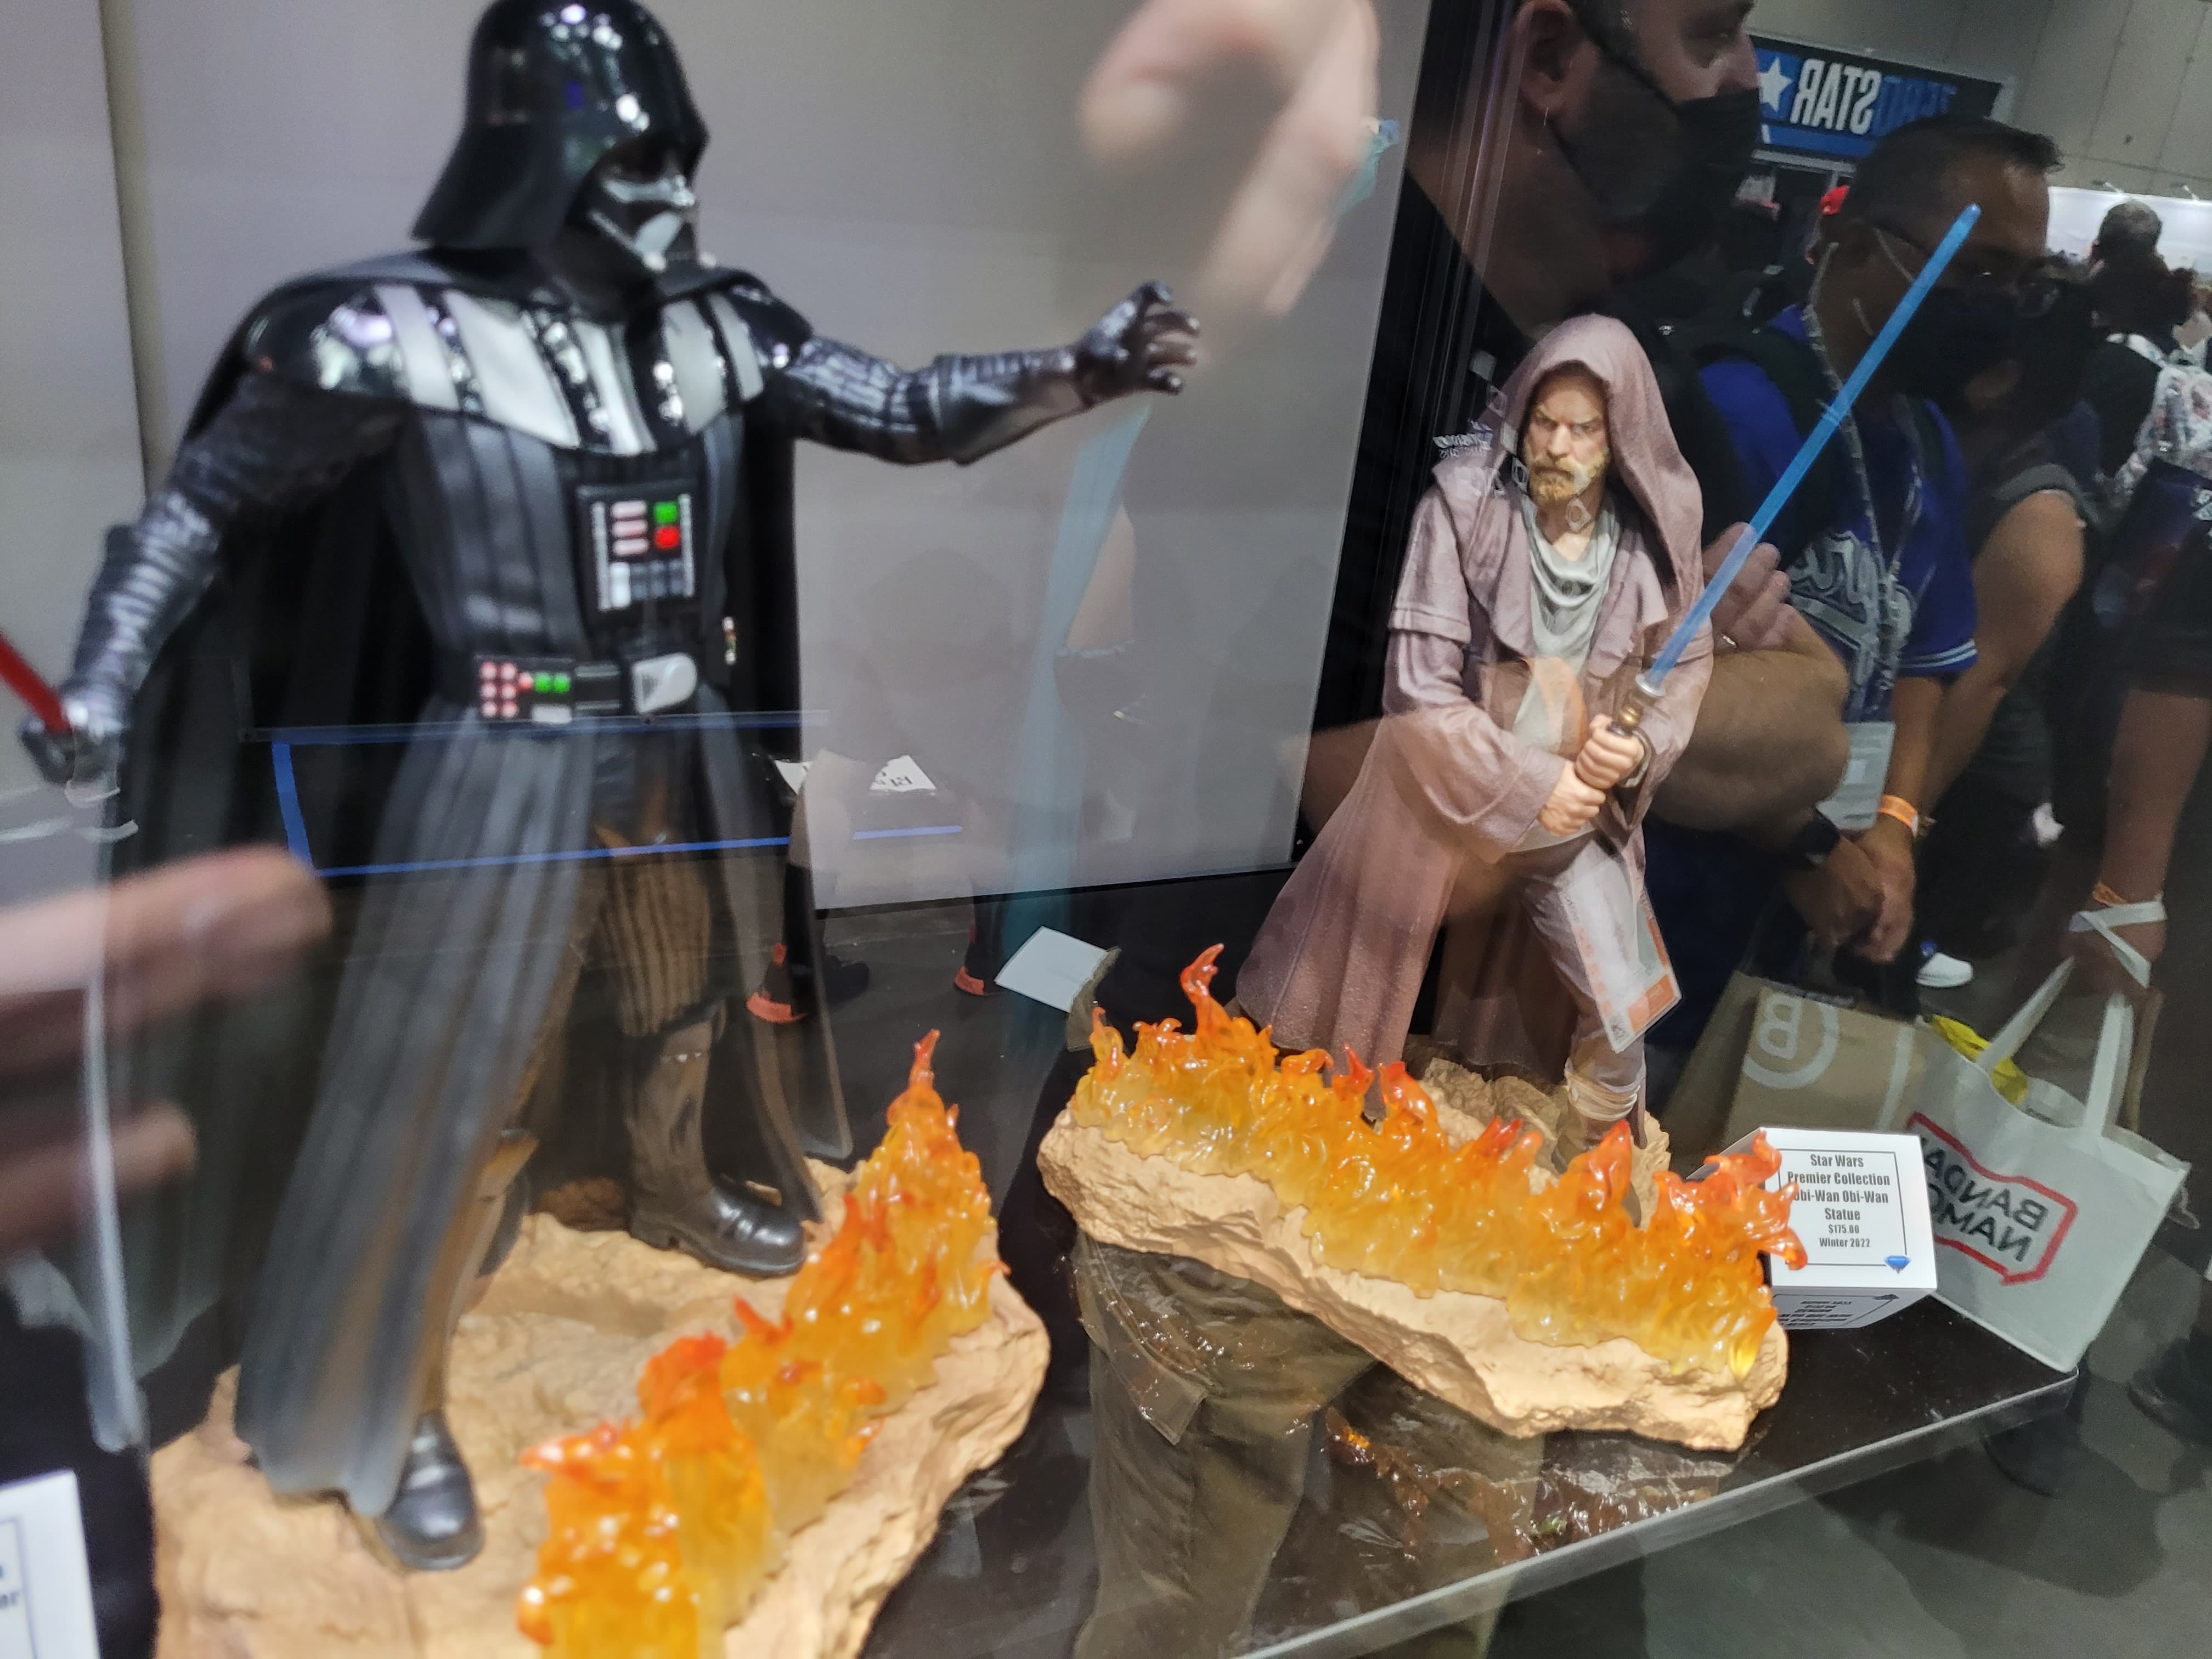 Vader vs. Kenobi statue set